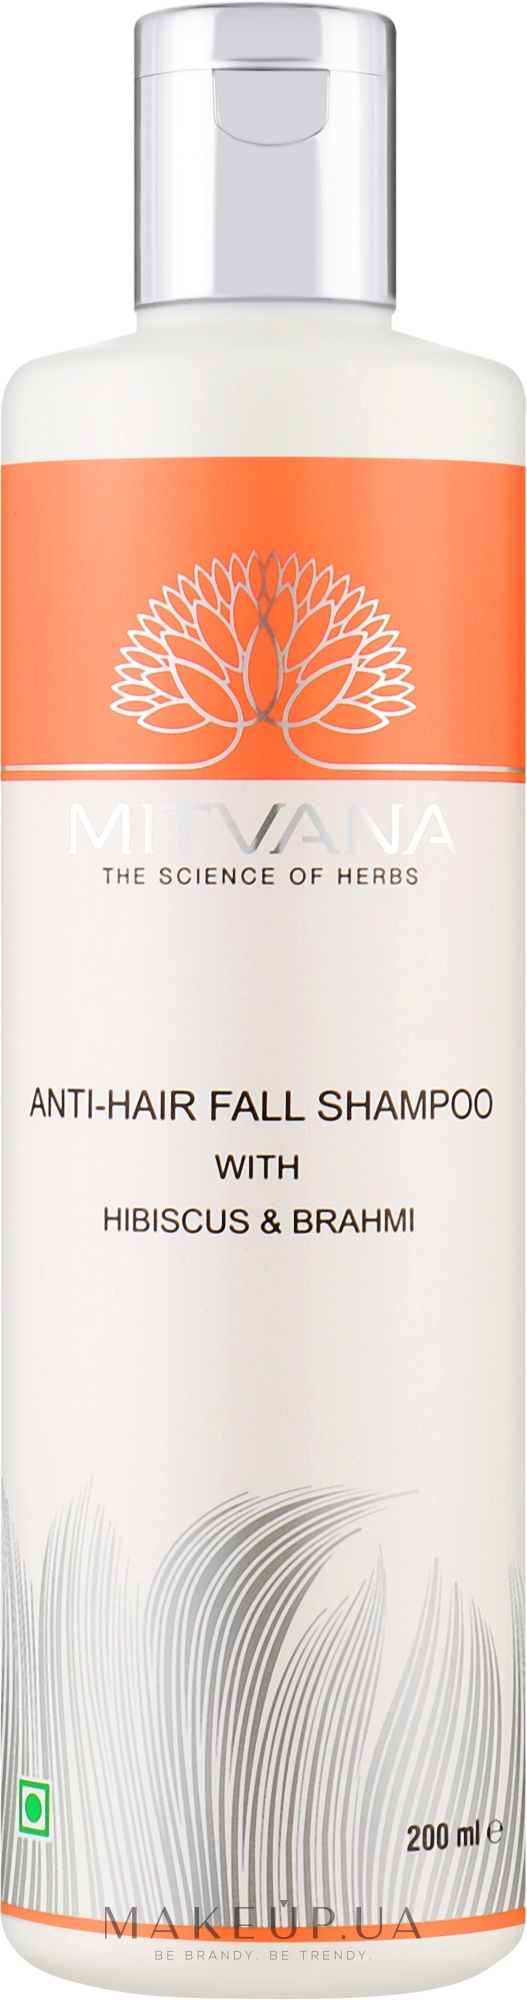 Шампунь для волос против выпадения с гибискусом и брахми - Mitvana Anti Hairfall Shampoo — фото 200ml